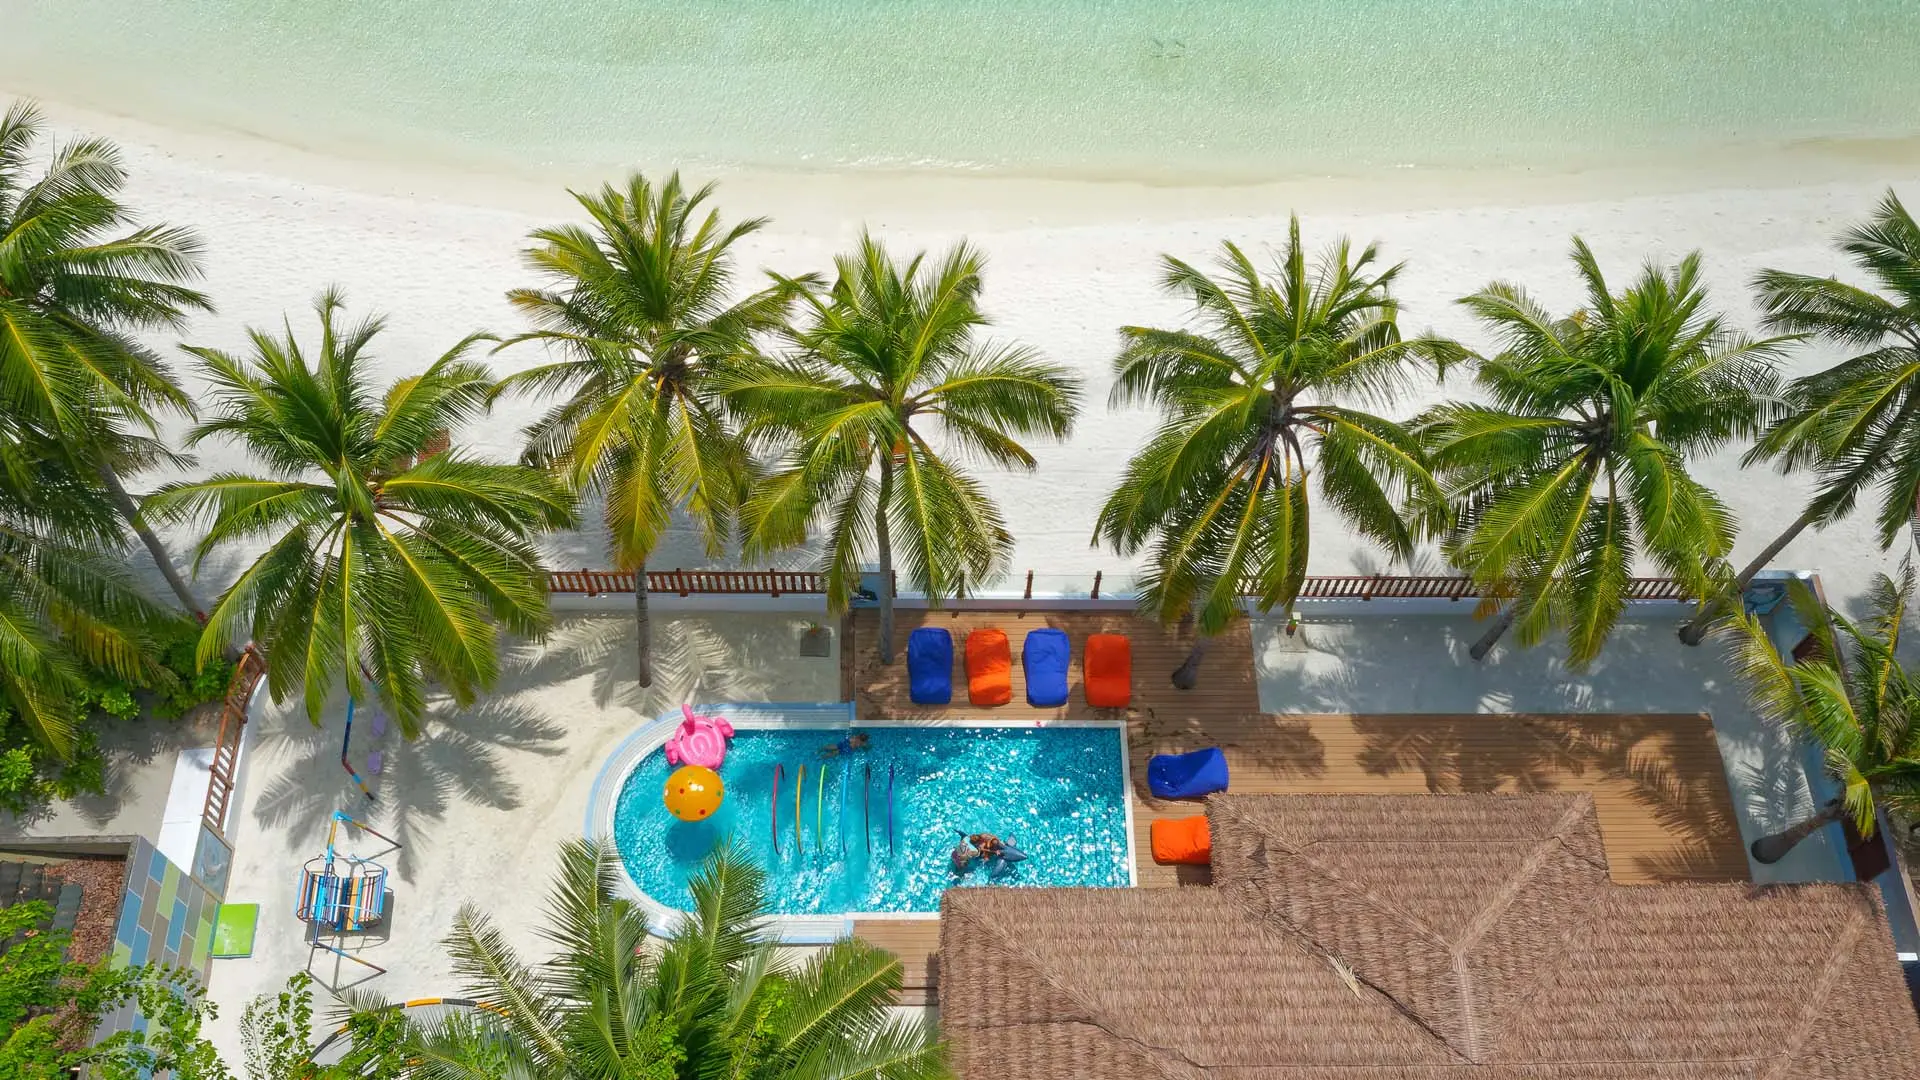 Hotel review Service & Facilities' - Paradise Island Resort & Spa - 2